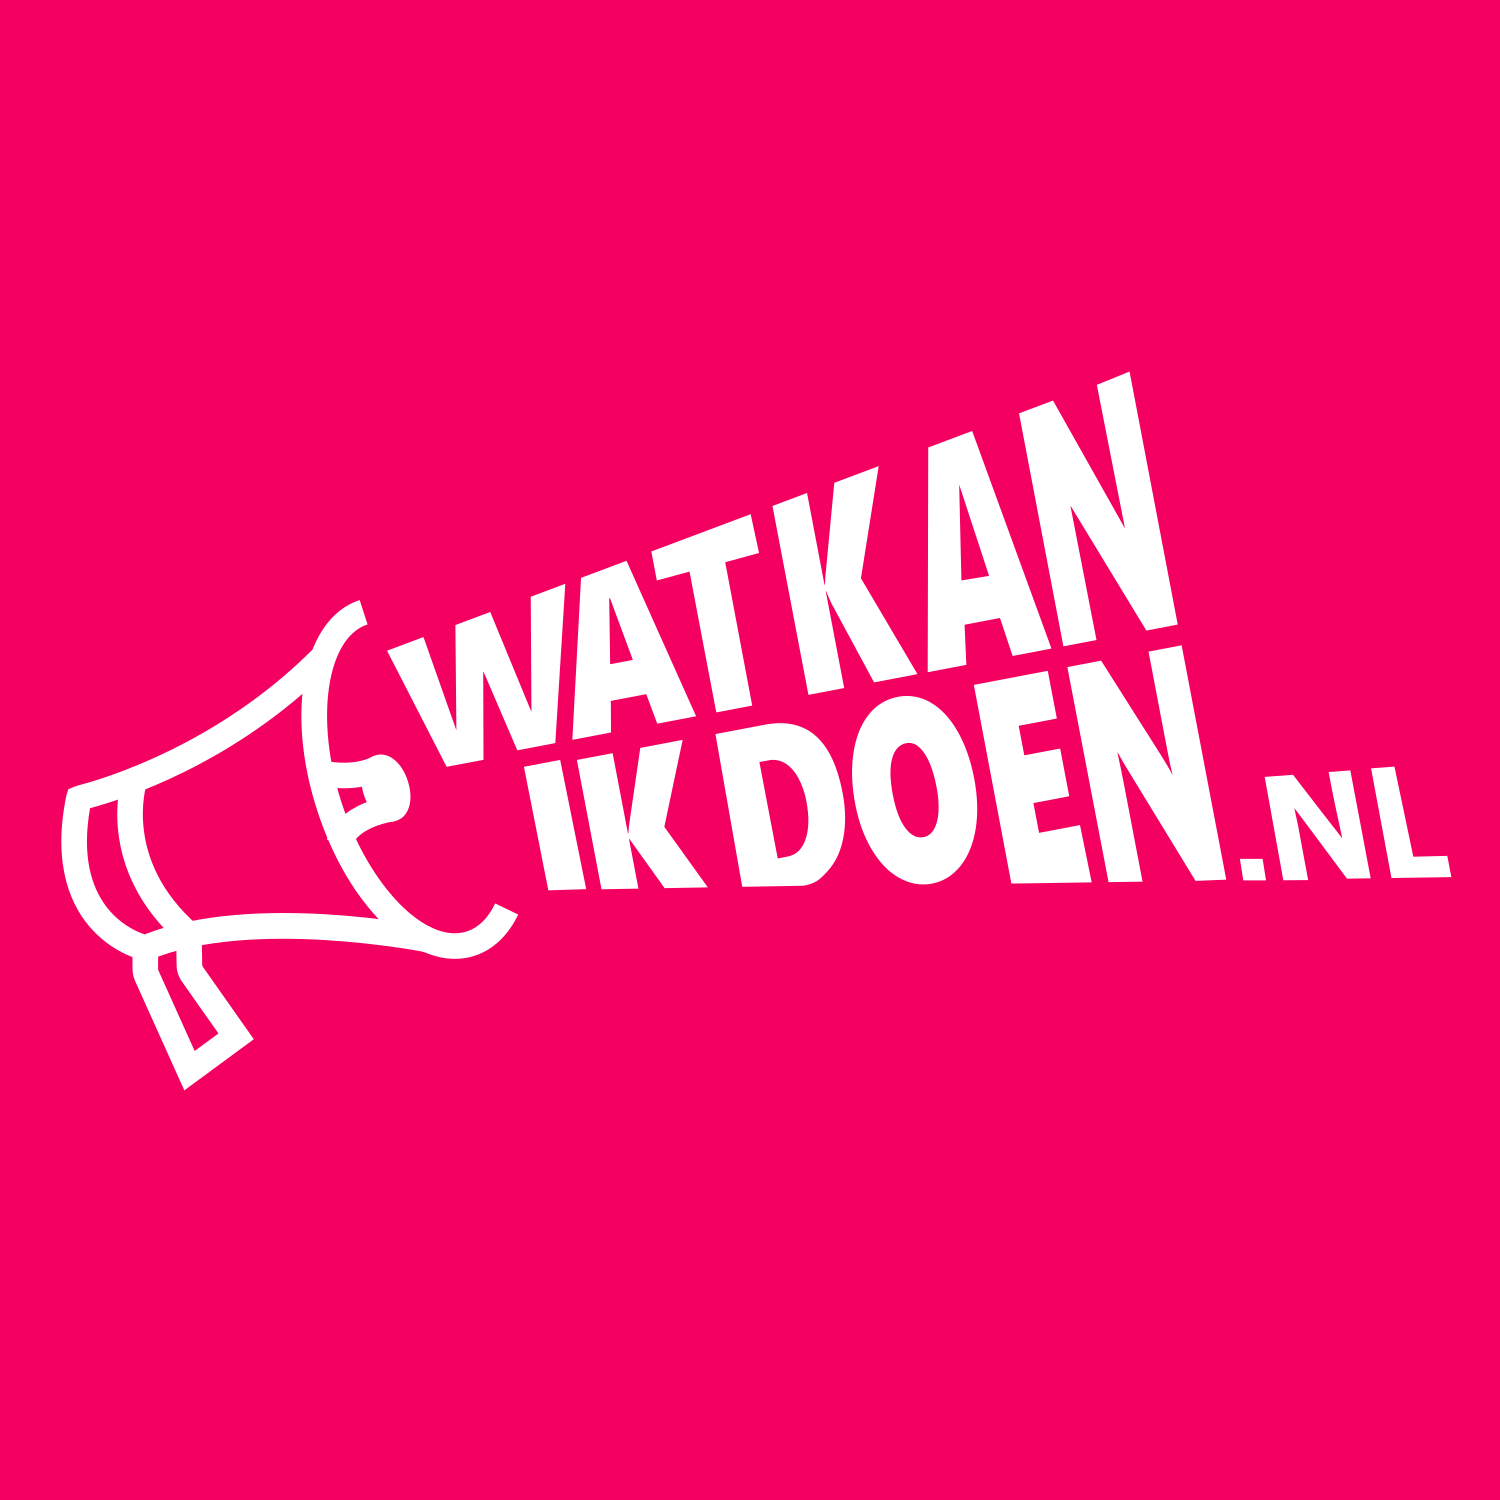 (c) Watkanikdoen.nl